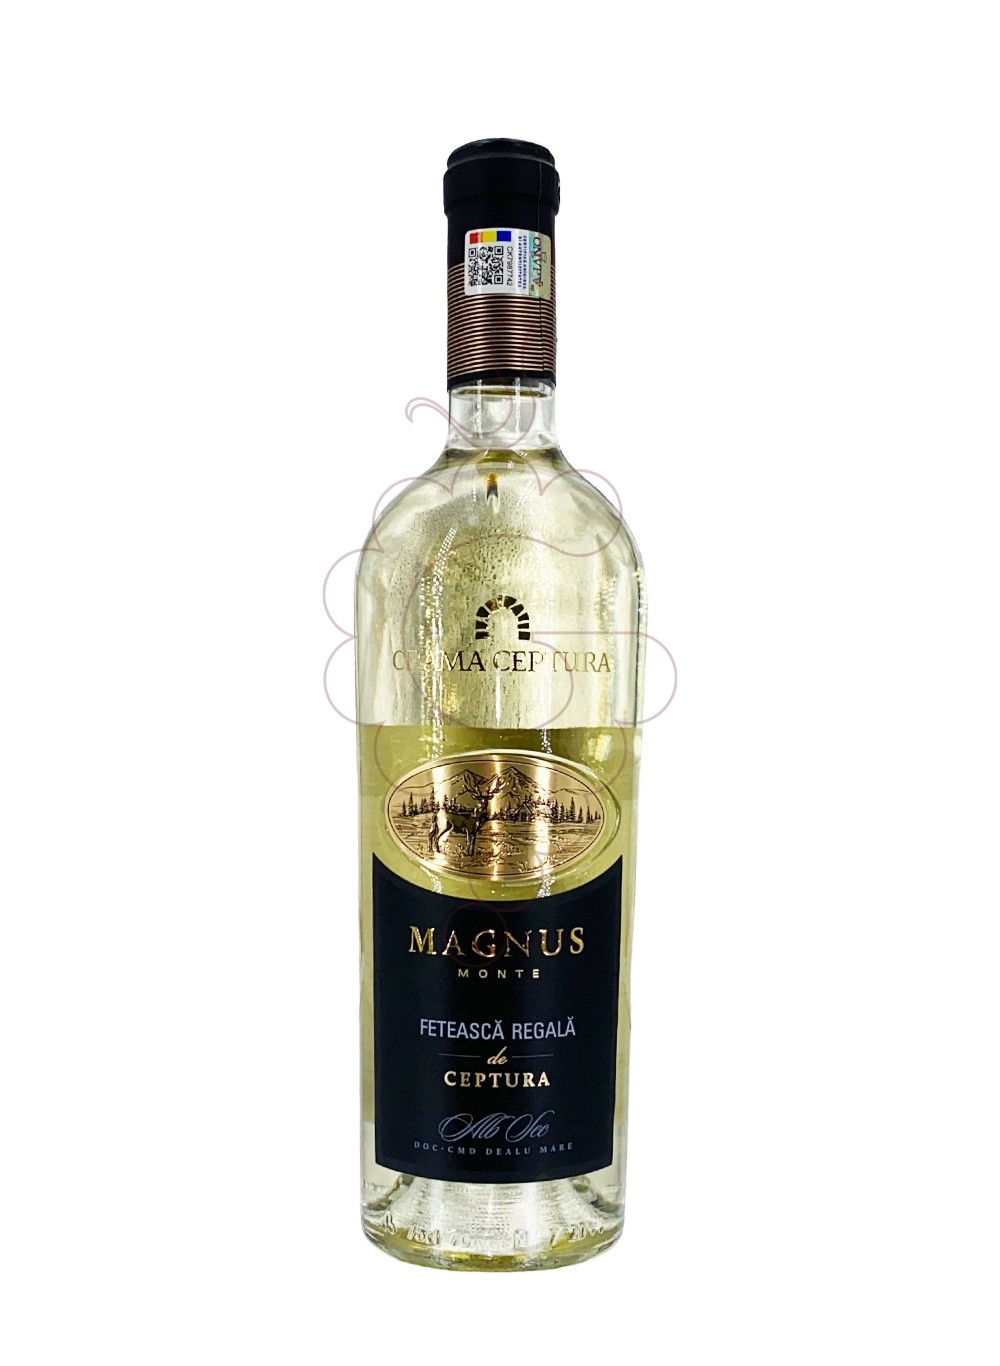 Photo Crama Ceptura Cervus Magnus Monte Feteasca Regala white wine